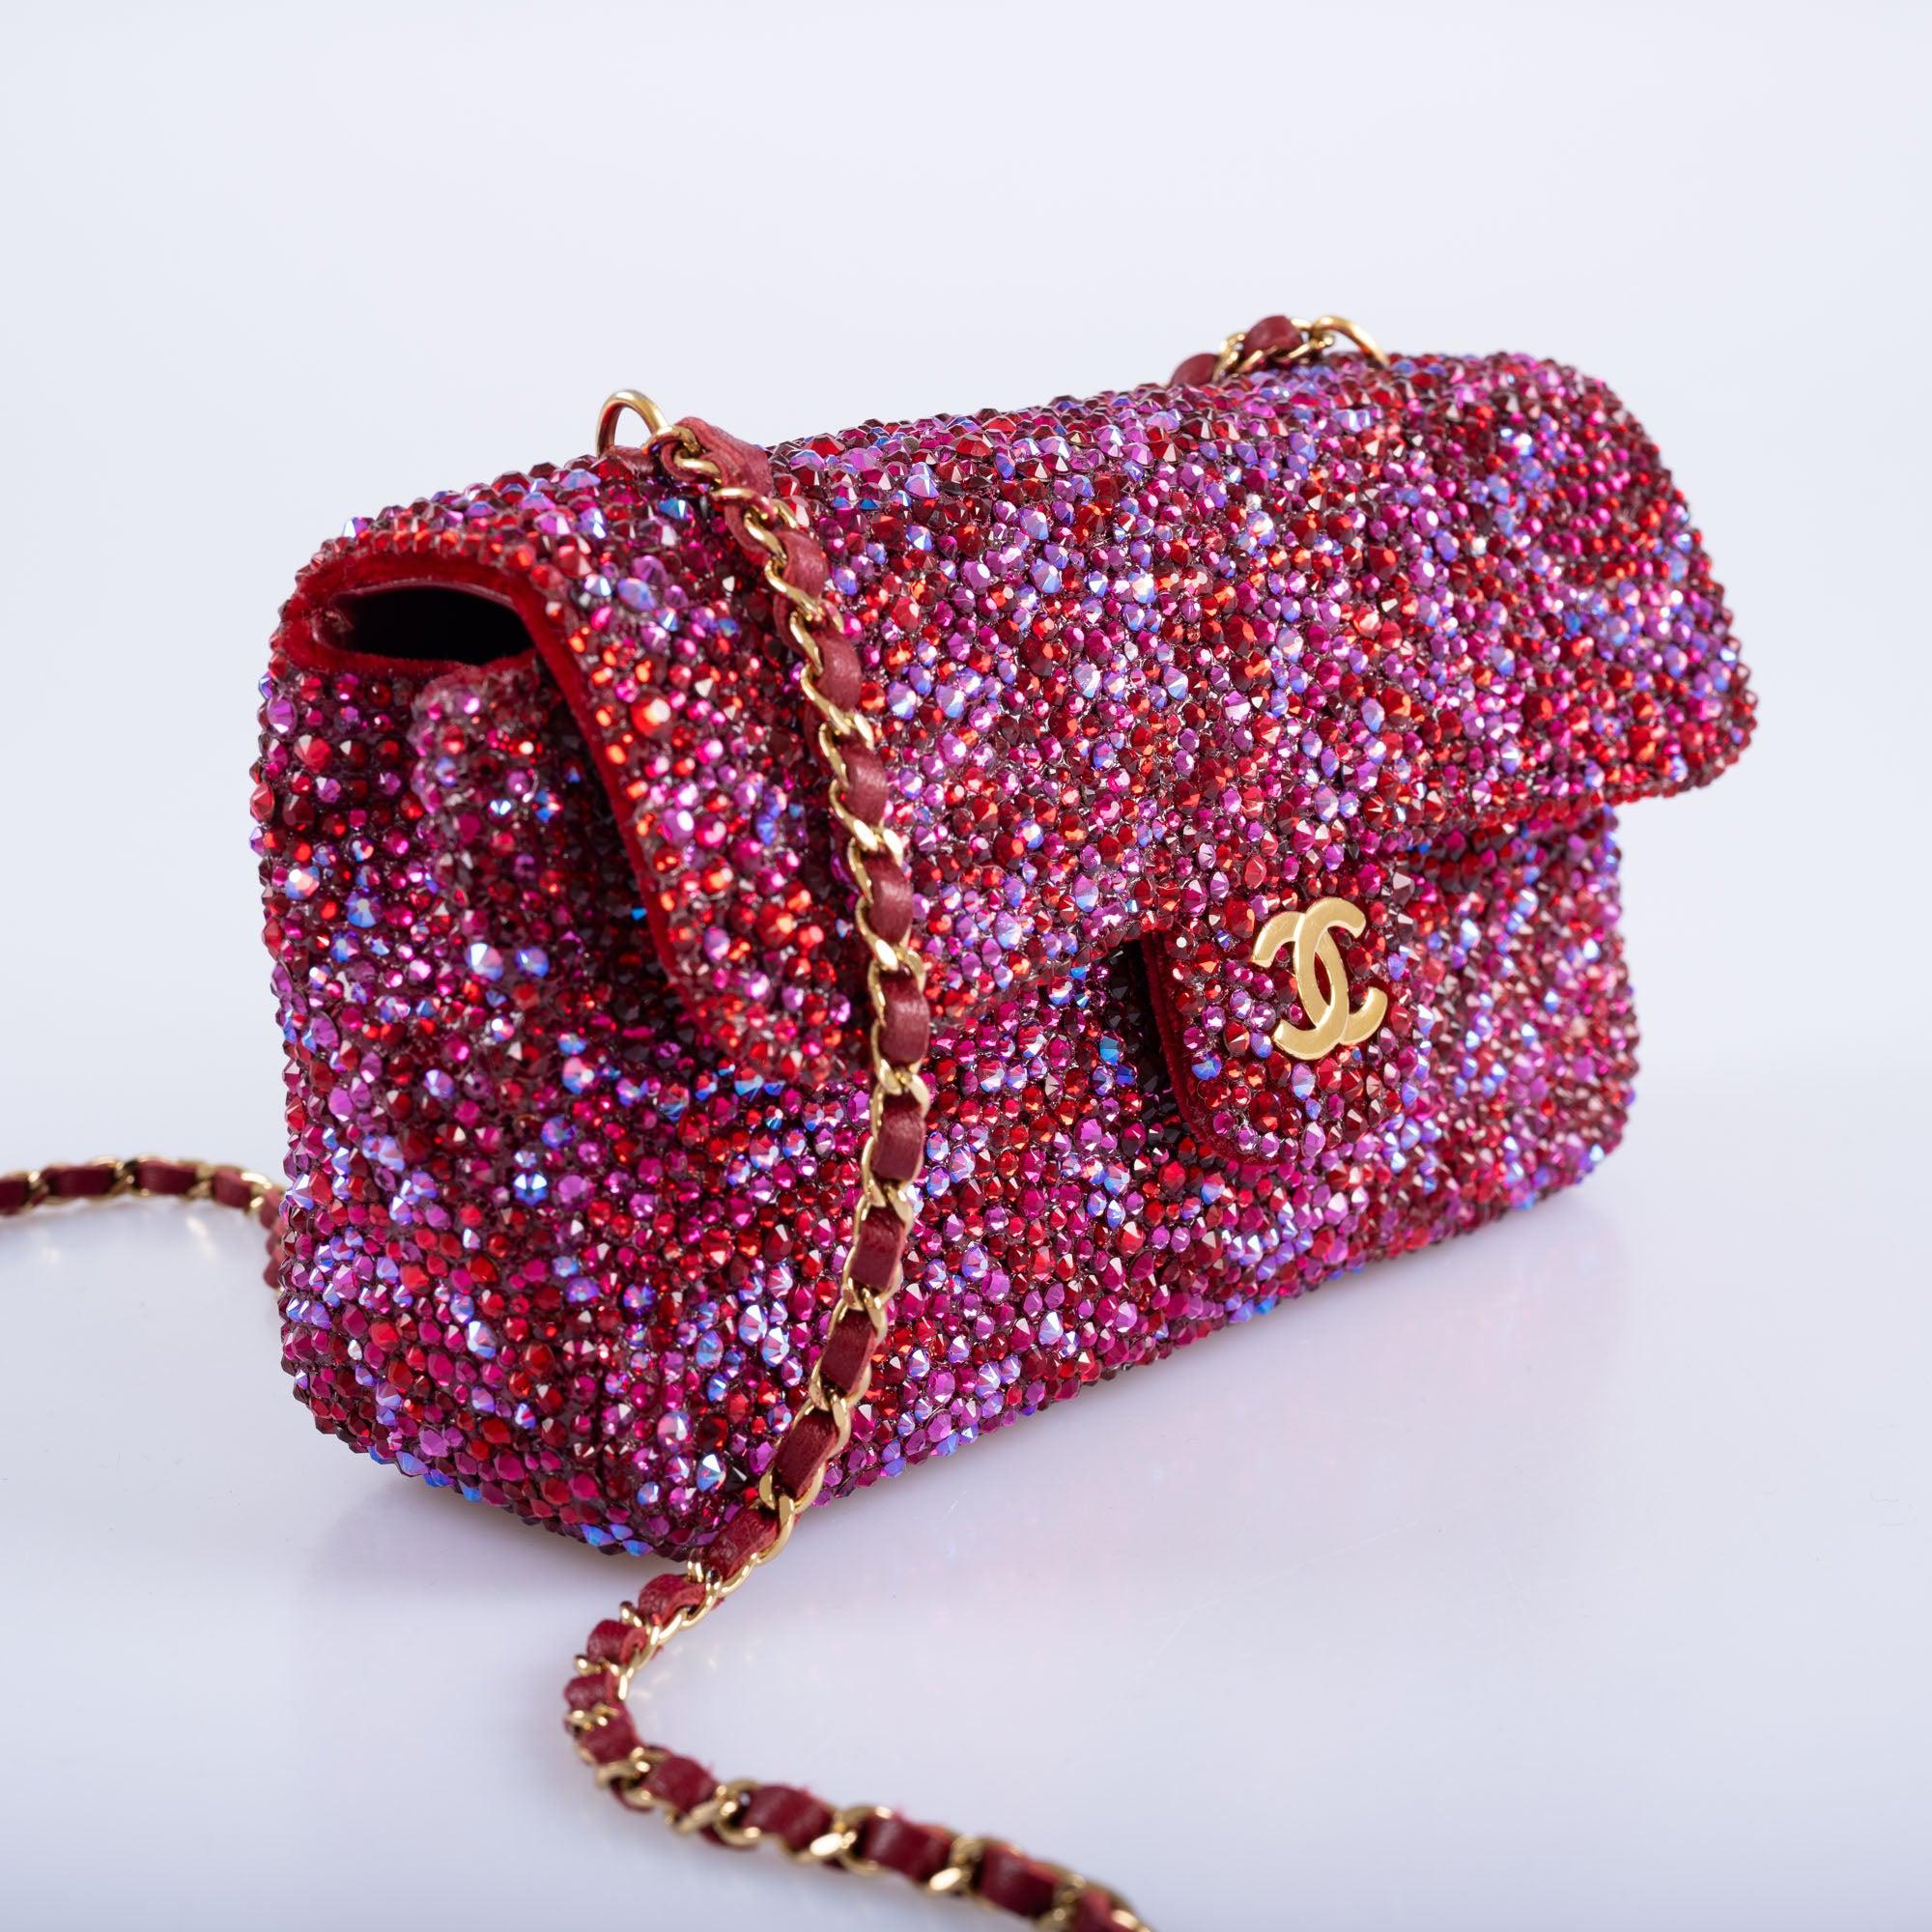 Vintage Chanel Camellia Flap Bag: A Dazzling Masterpiece with Custom Swarovski Crystals